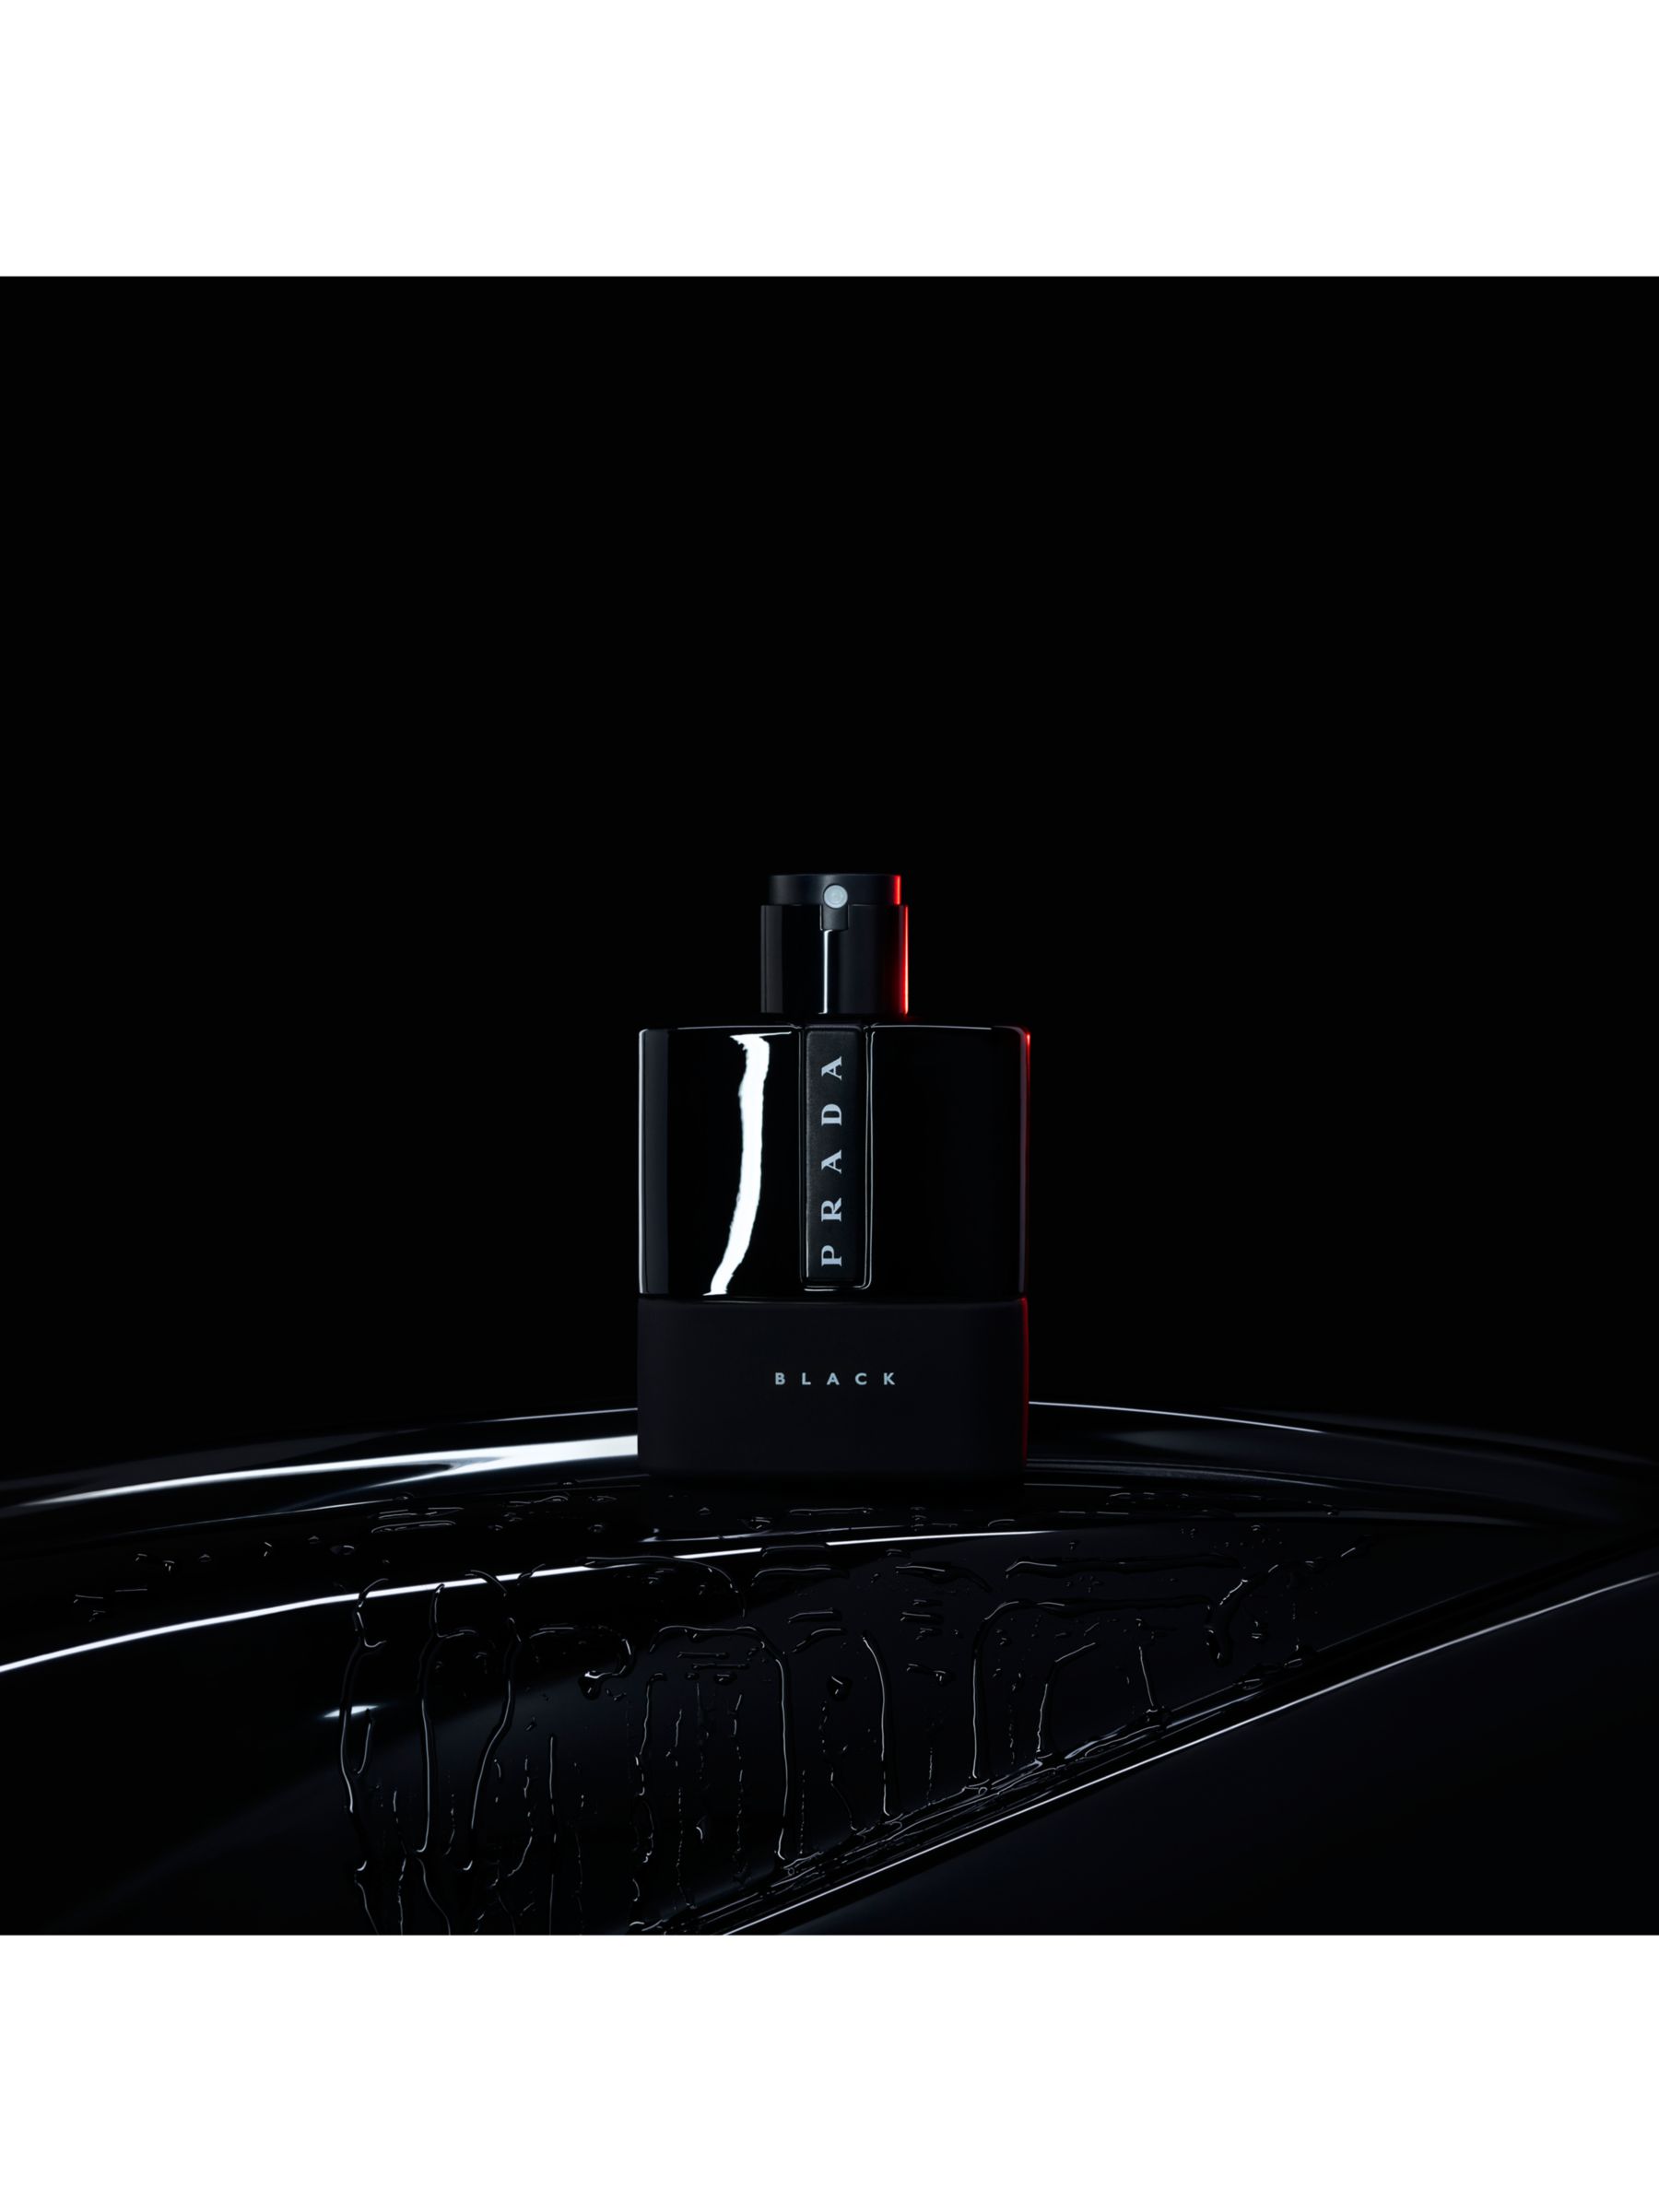 Prada Luna Rossa Black Eau de Parfum, 50ml at John Lewis & Partners